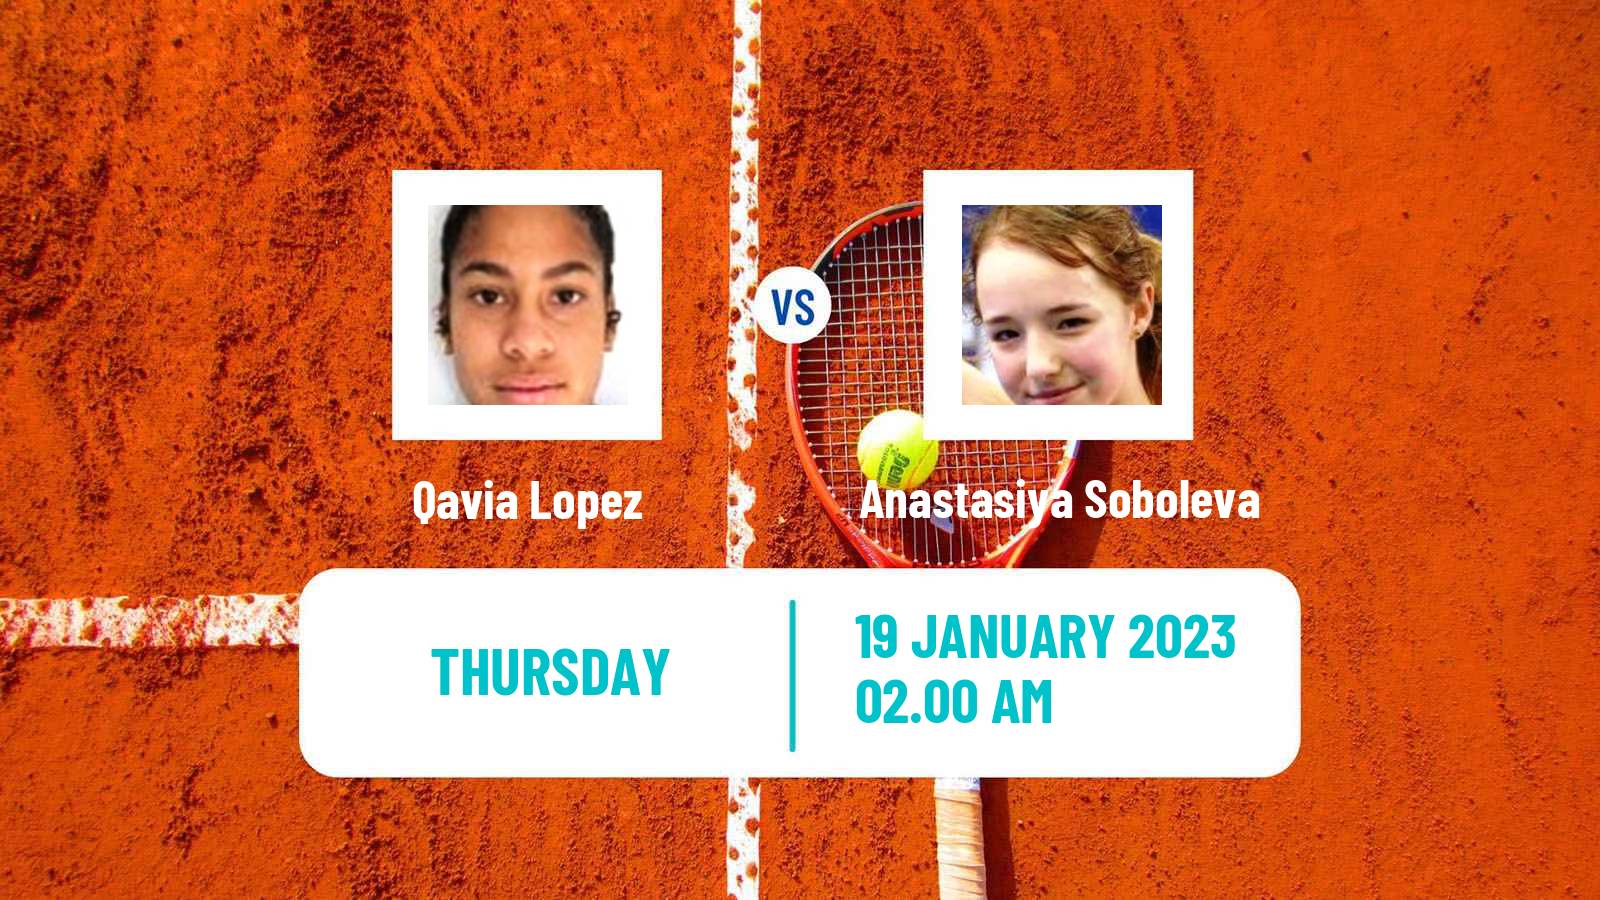 Tennis ITF Tournaments Qavia Lopez - Anastasiya Soboleva